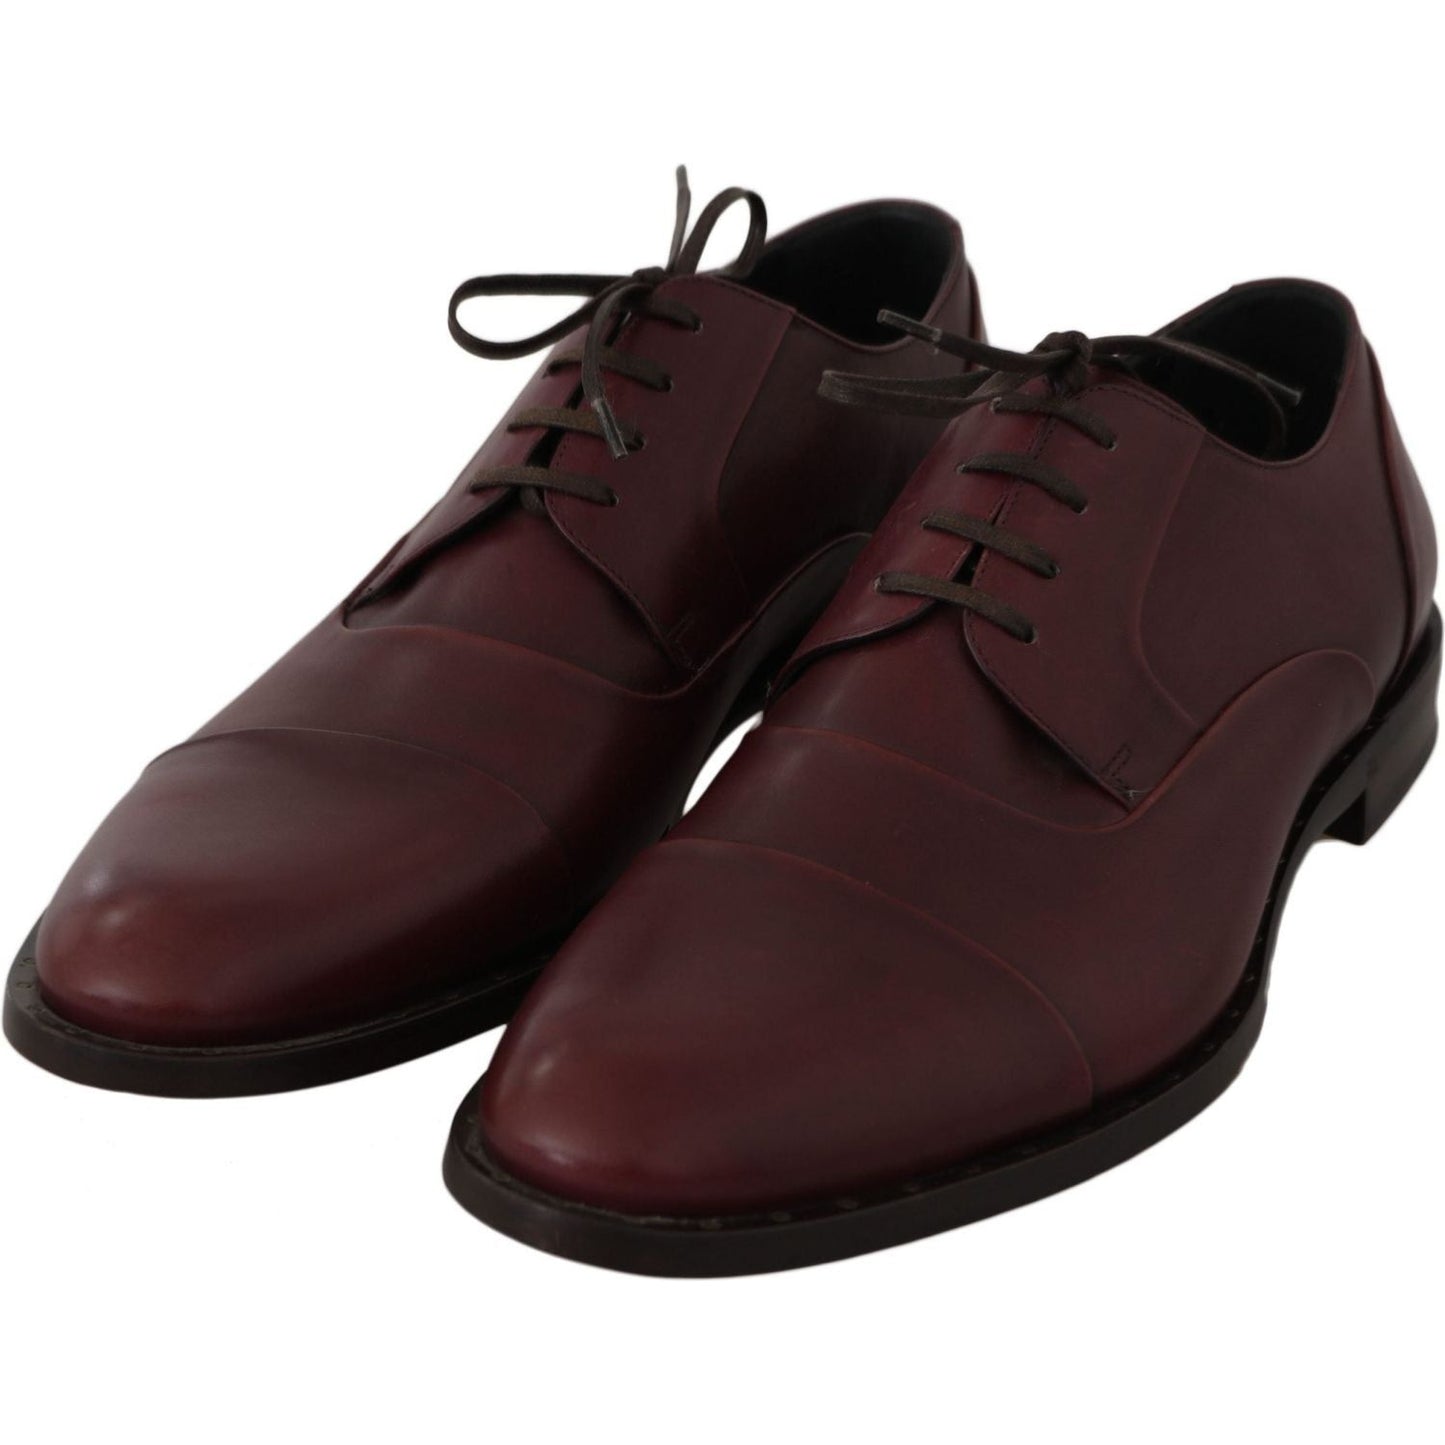 Dolce & Gabbana Elegant Bordeaux Leather Dress Shoes red-bordeaux-leather-derby-formal-shoes IMG_8400-scaled.jpg